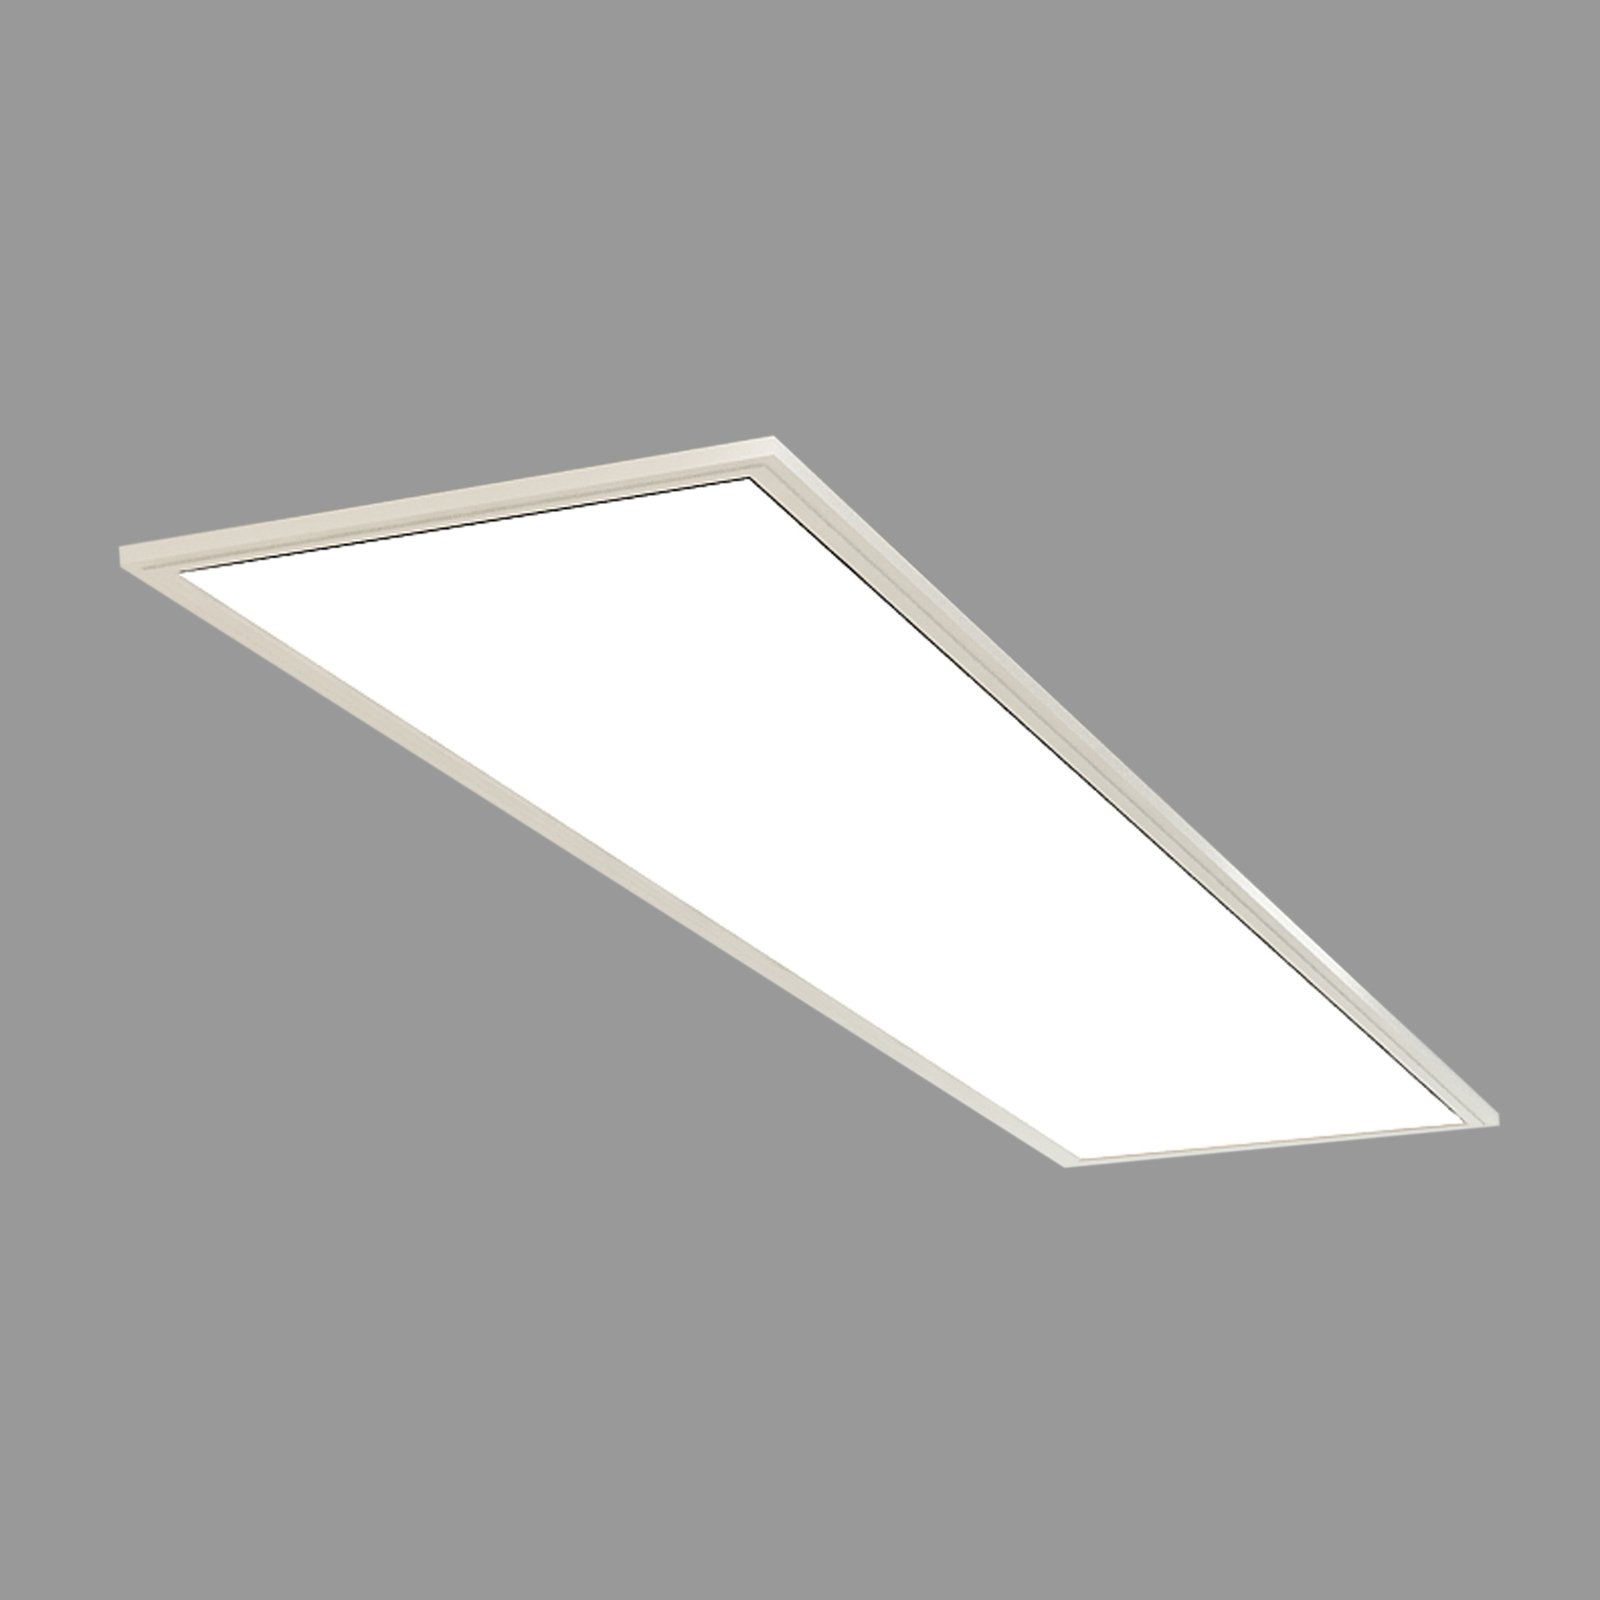 LED-Panel Simple, biały, ultrapłaski, 119,5x29,5cm